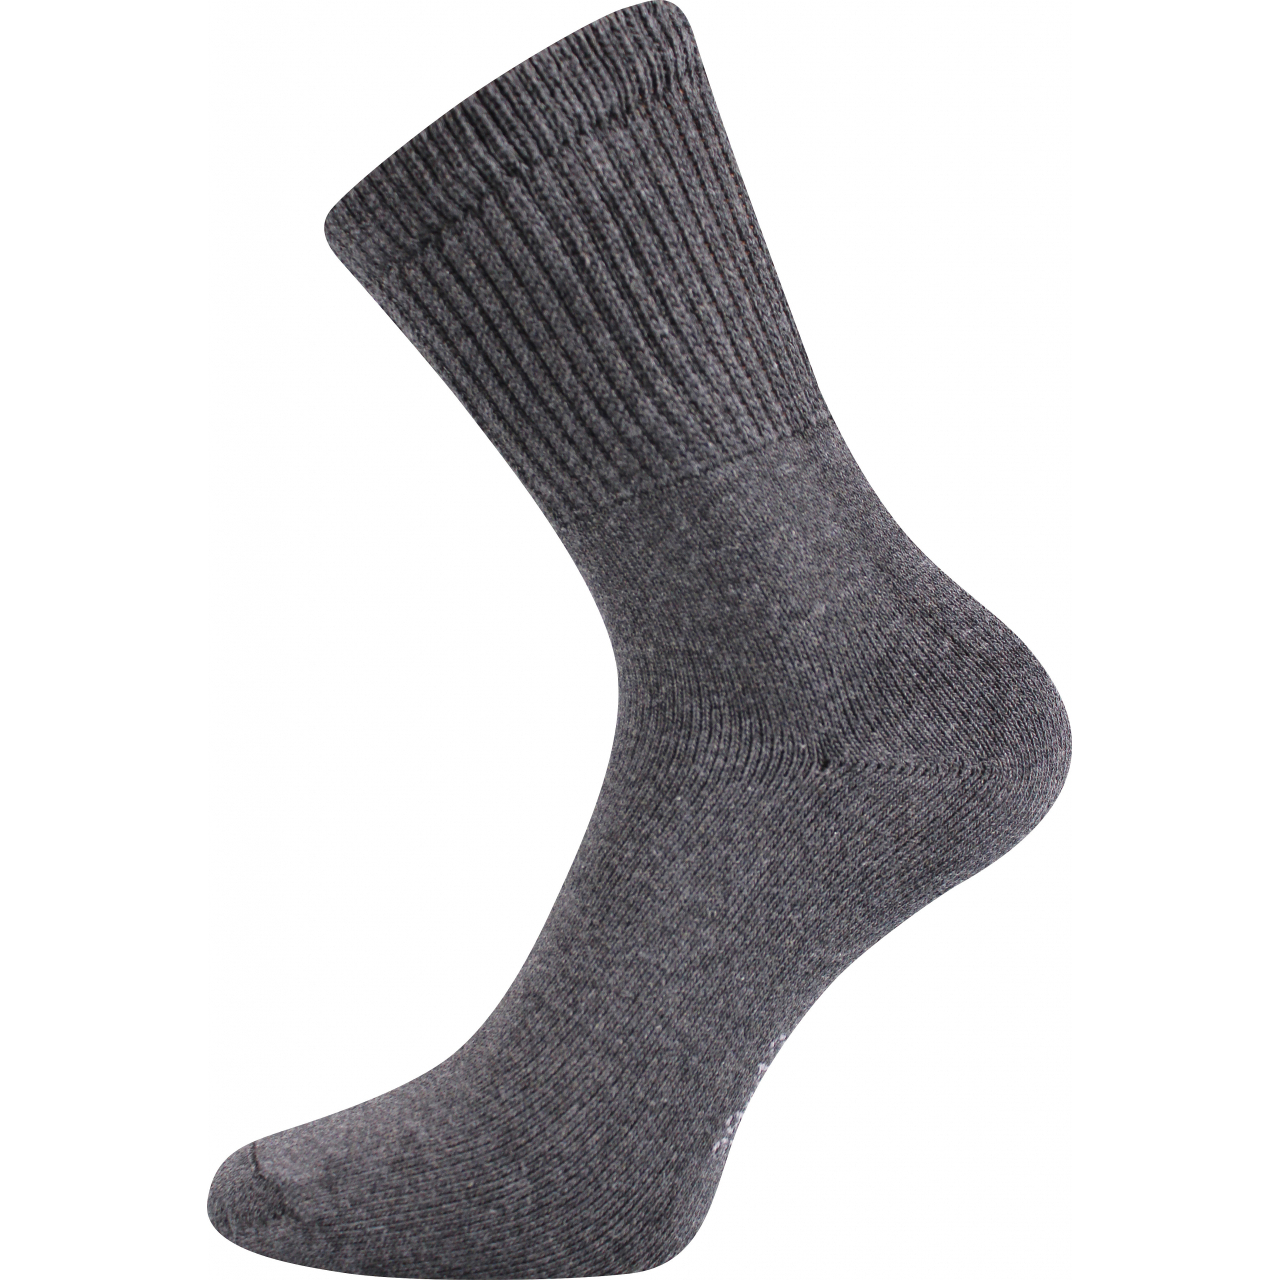 Ponožky trekingové unisex Boma 012-41-39 I - tmavě šedé, 35-38